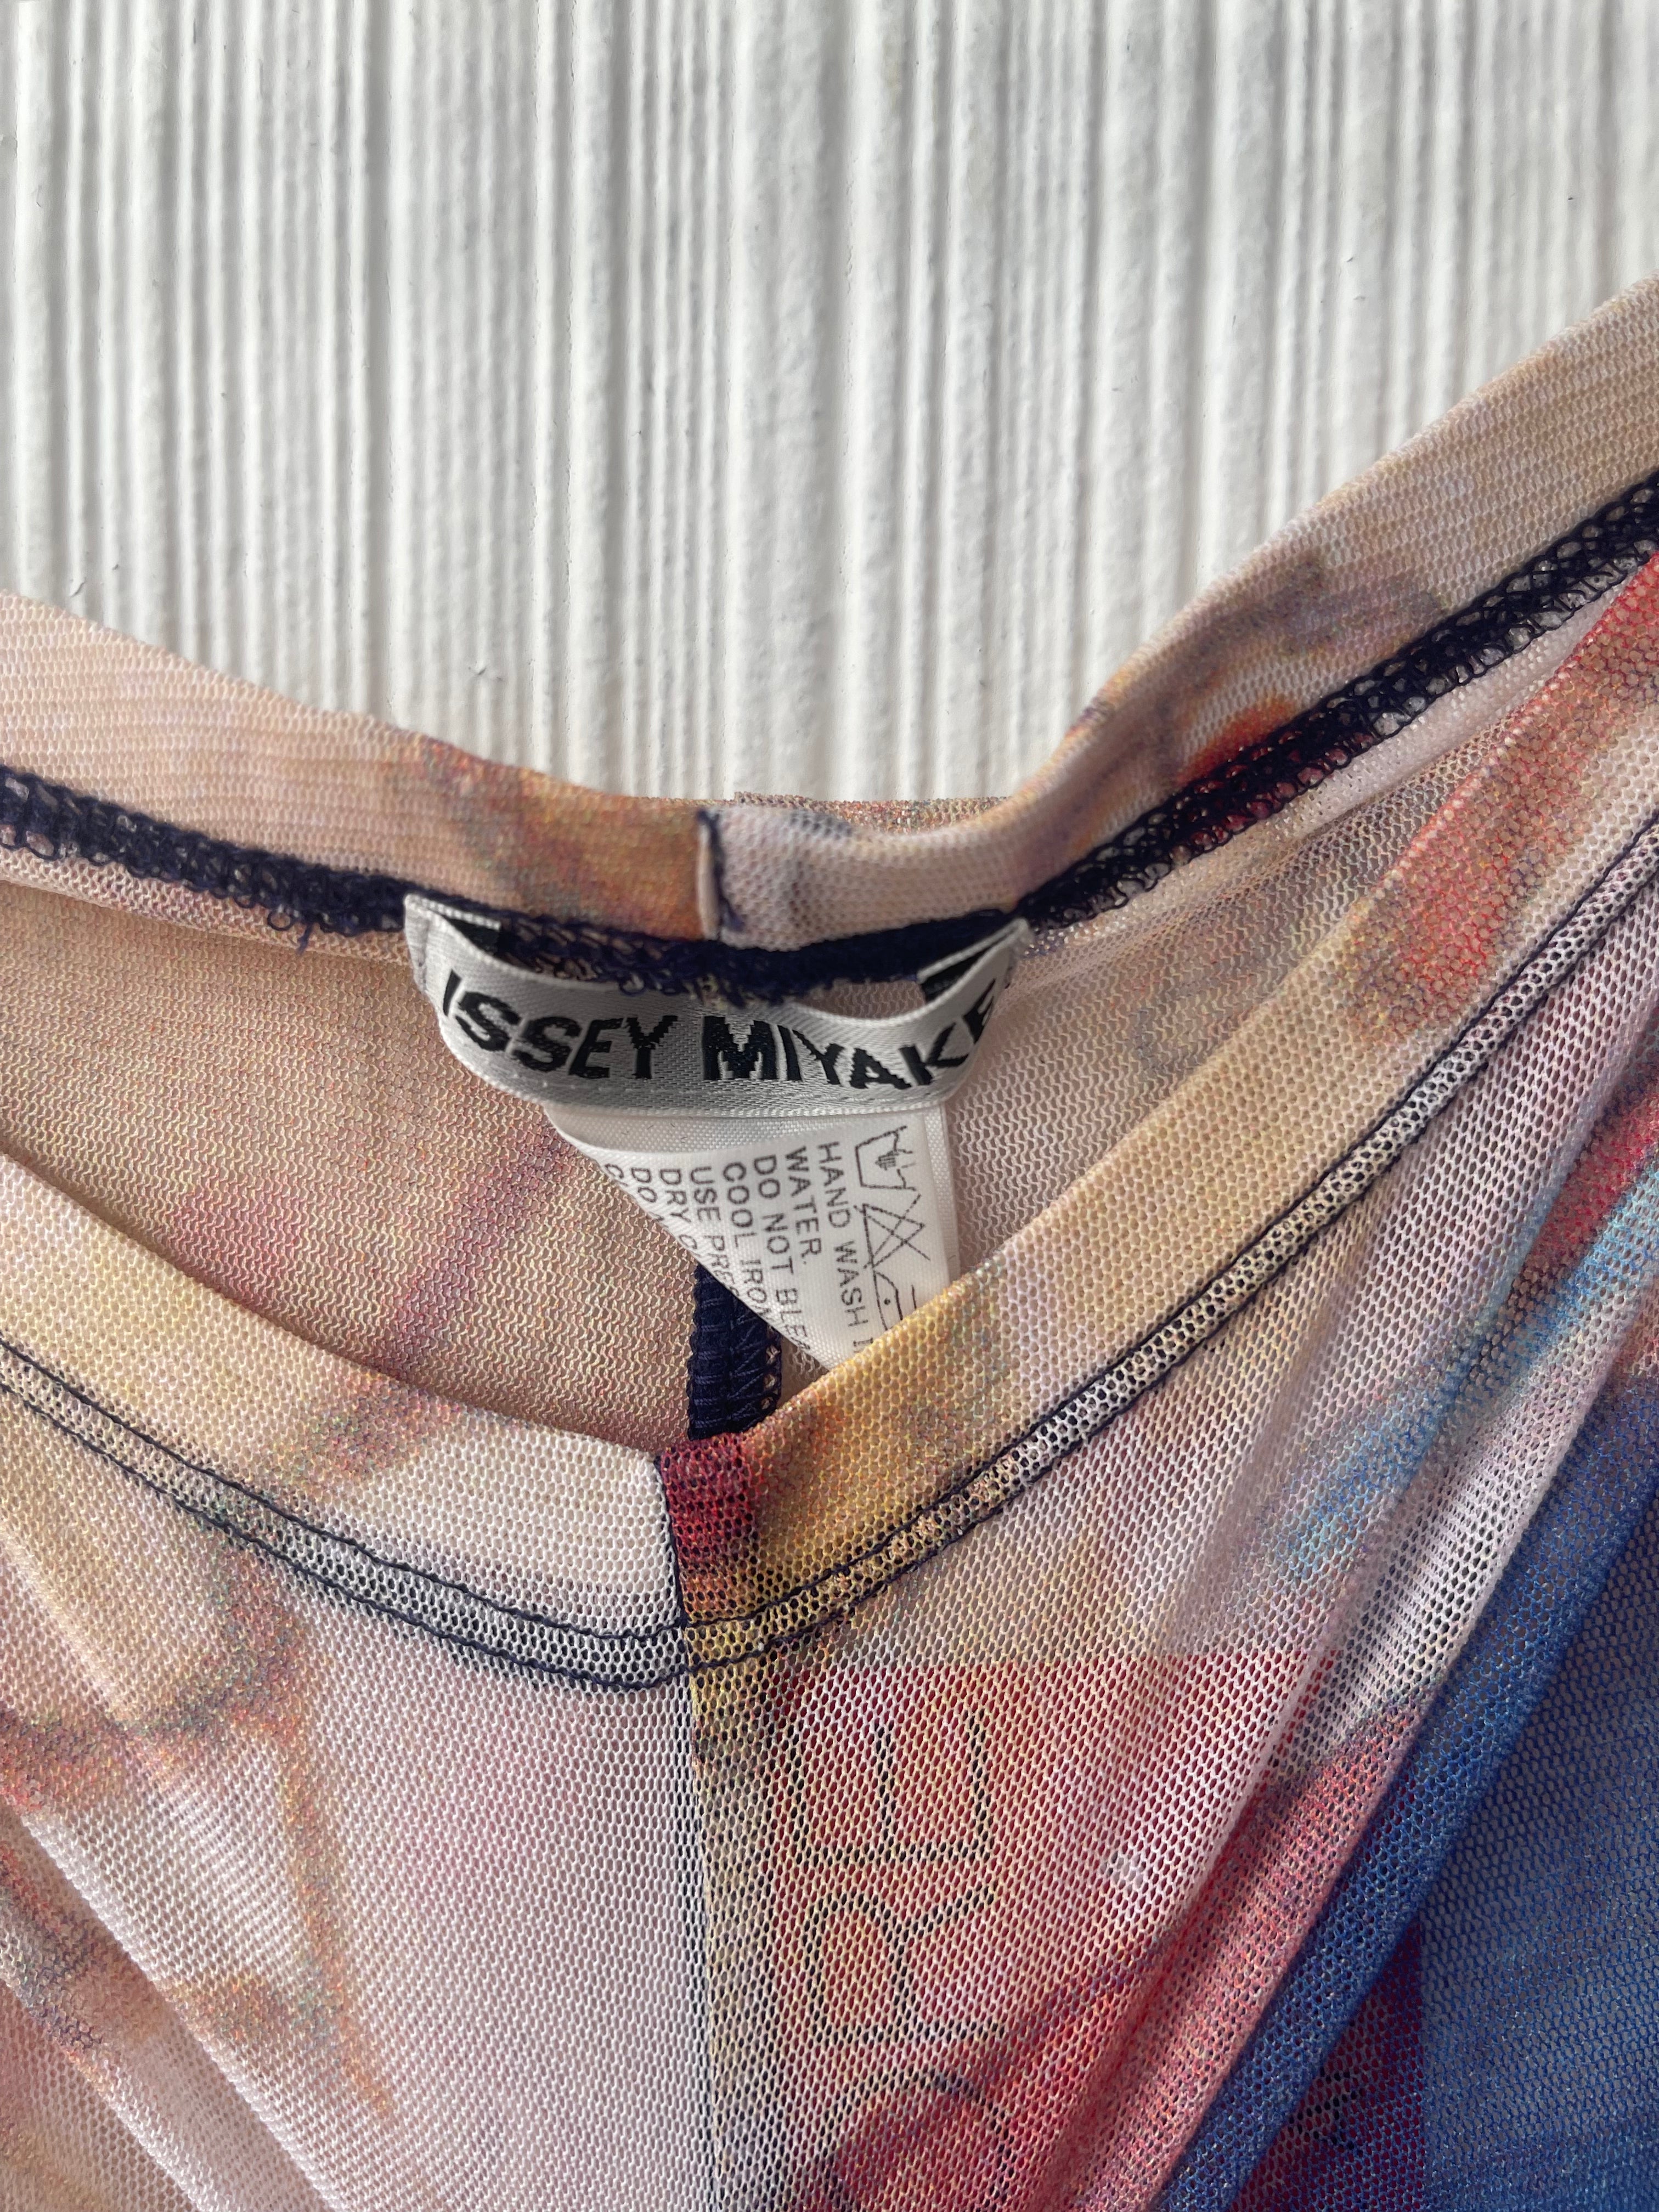 Issey Miyake x Aya Takano - Naoki Takizawa printed mesh top & leggings